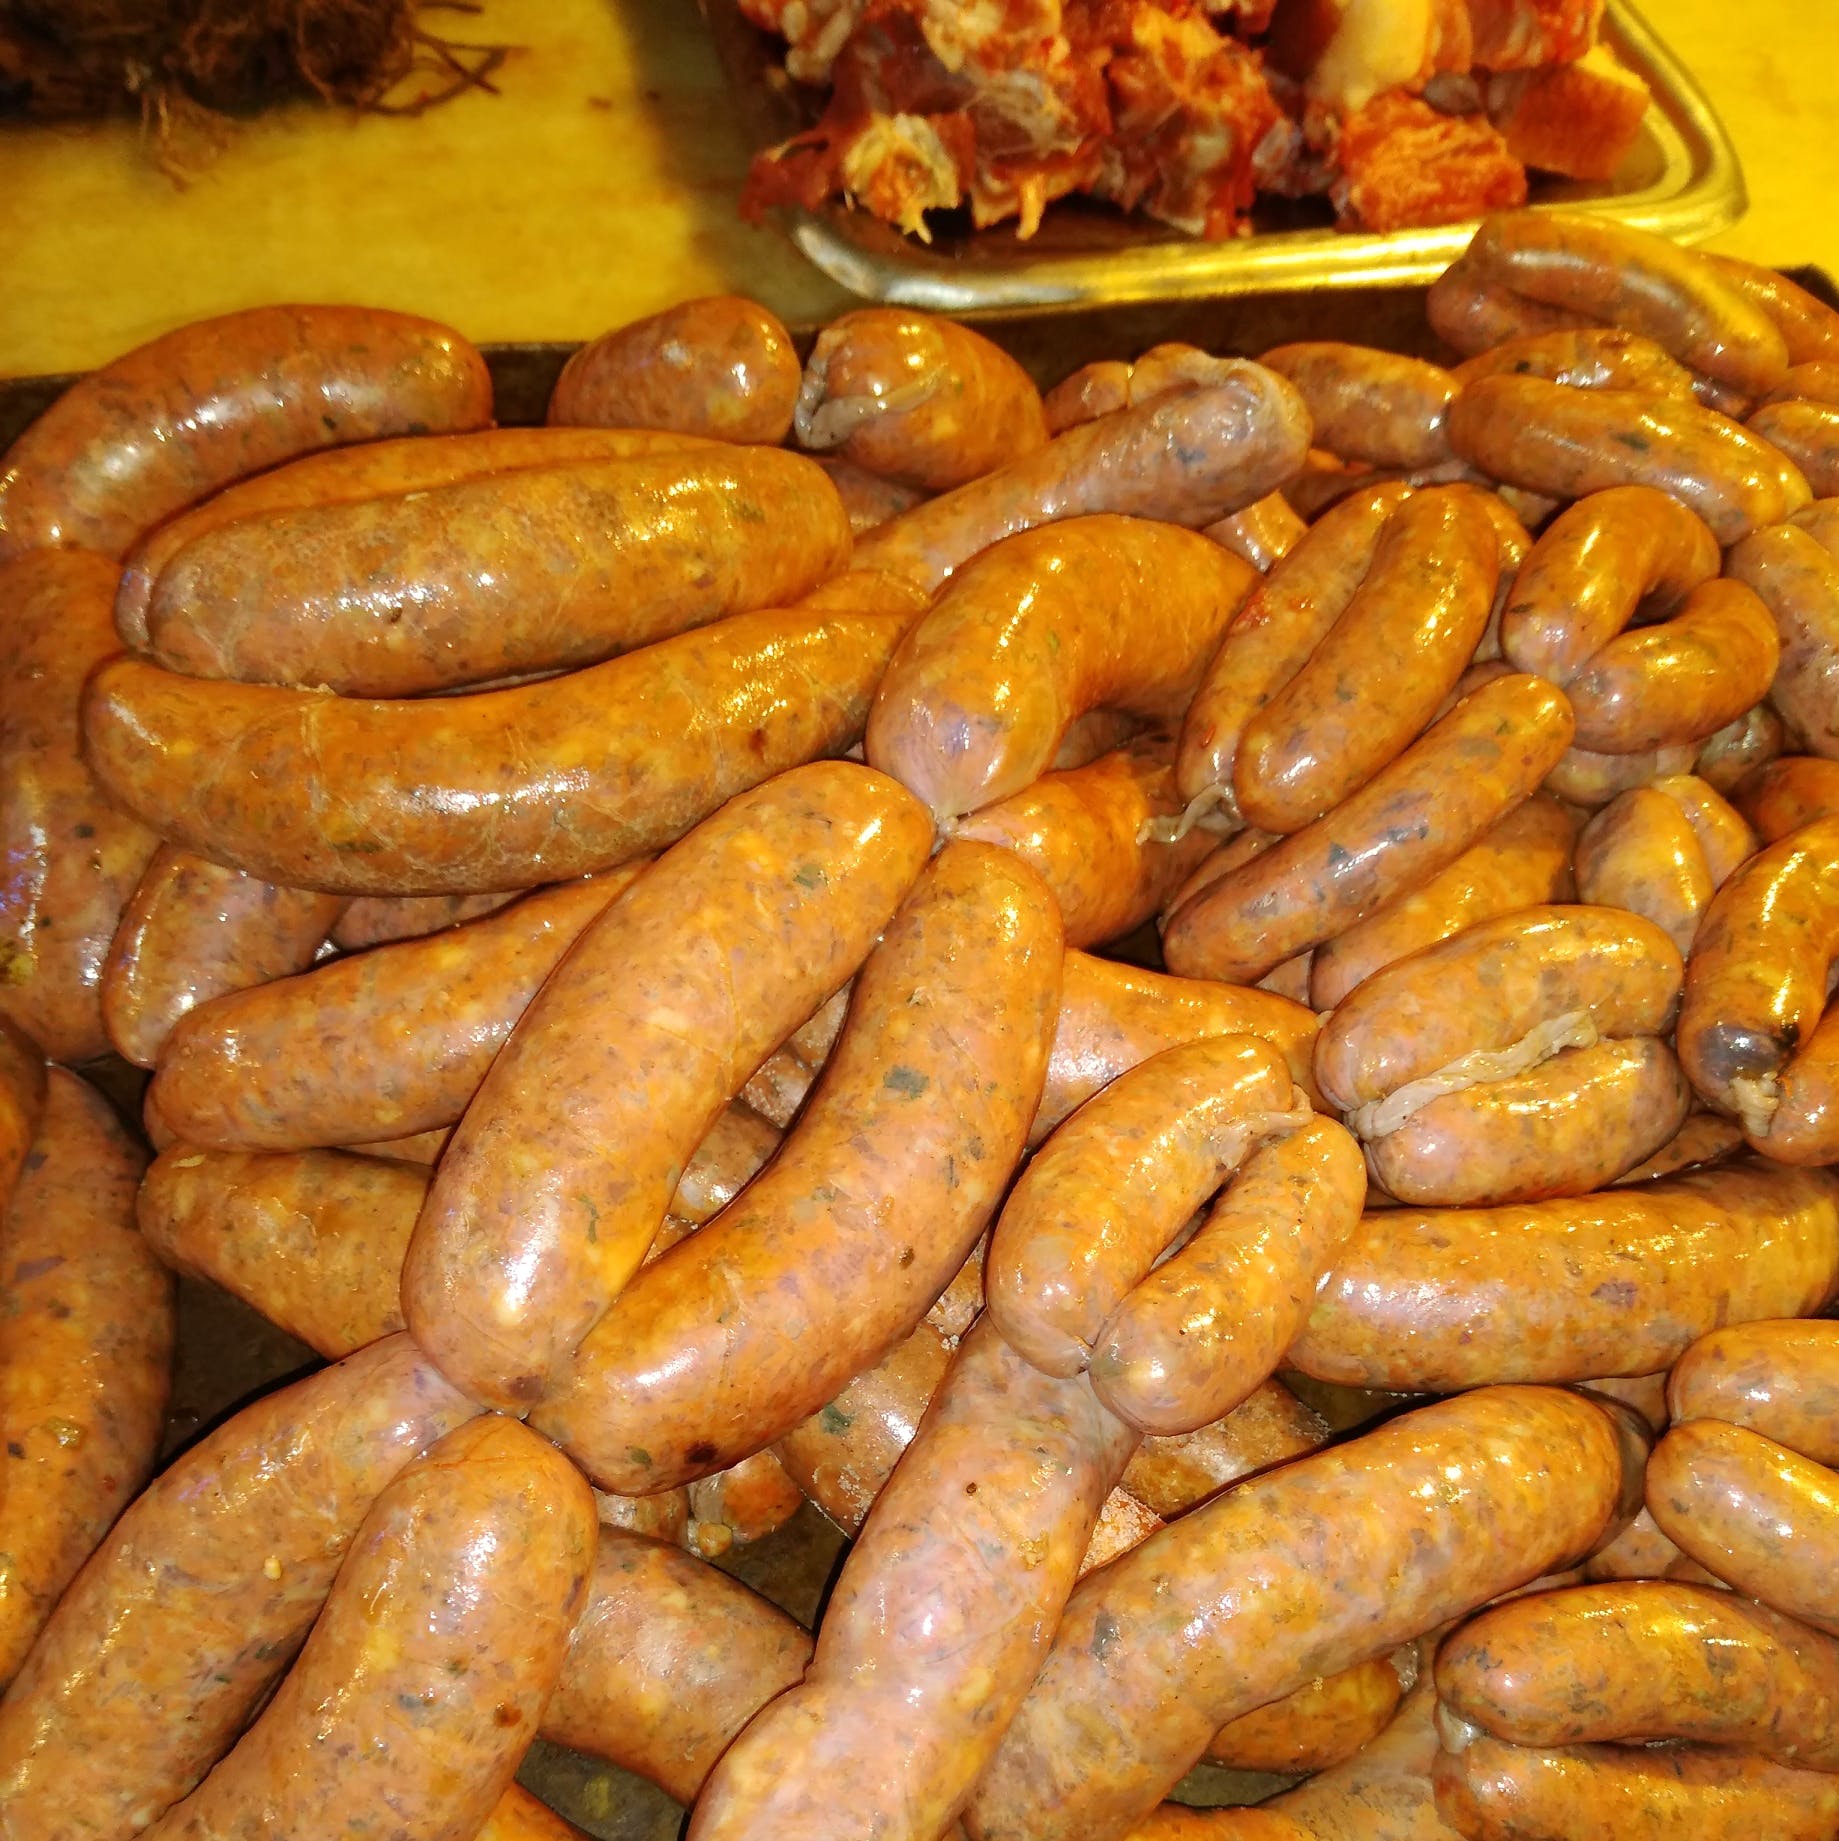 Sausage,Boudin,Cumberland sausage,Andouille,Italian sausage,Food,Knackwurst,Thuringian sausage,Breakfast sausage,Kielbasa